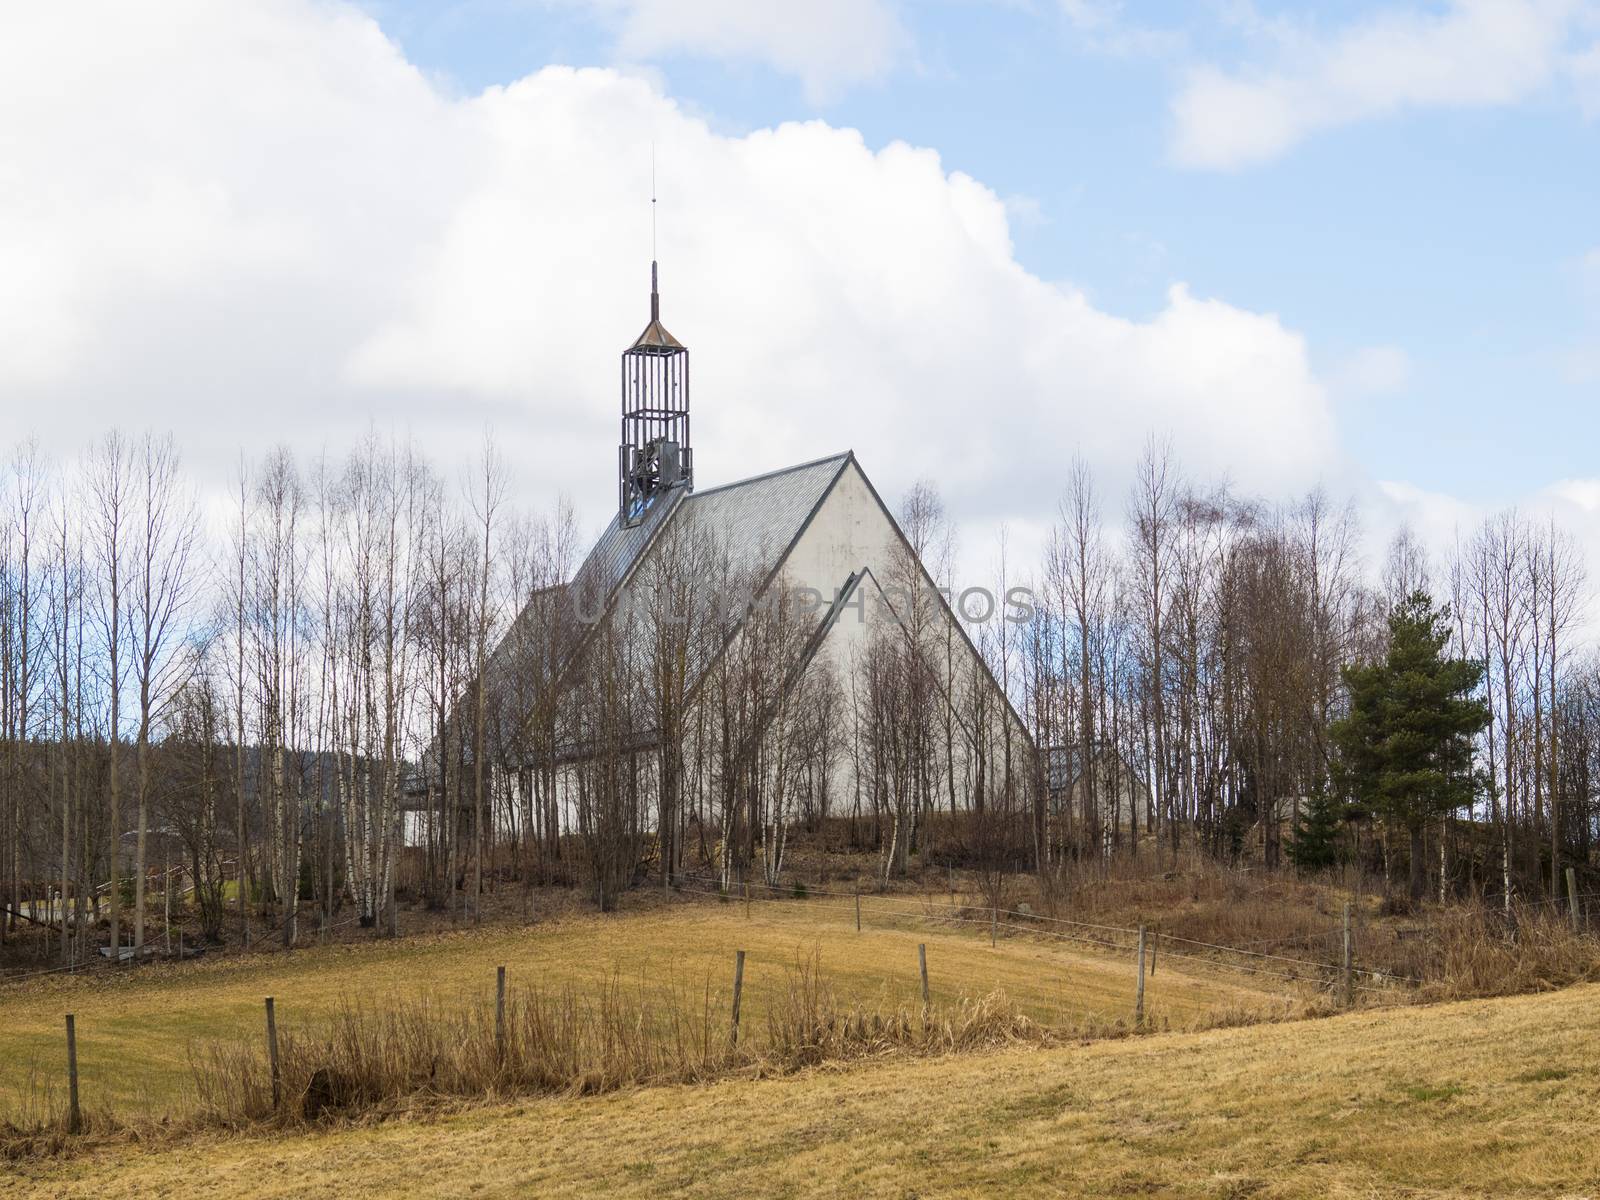 Lommedalen Church, a modern church built in medieval style, in Lommedalen near Oslo in Norway.